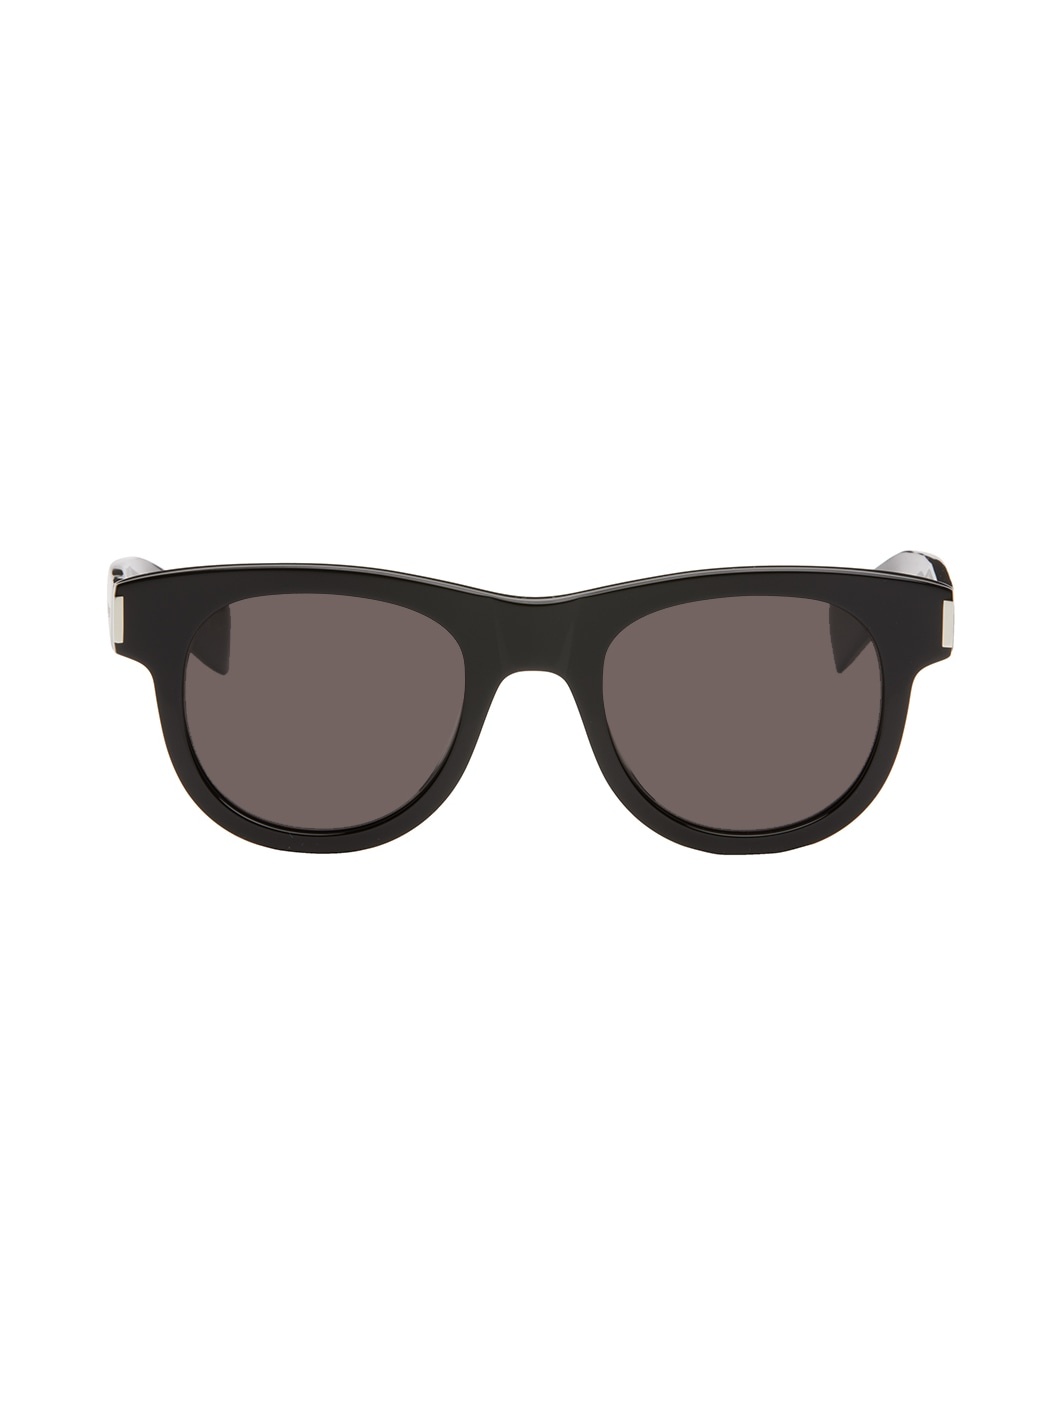 Black SL 571 Sunglasses - 1